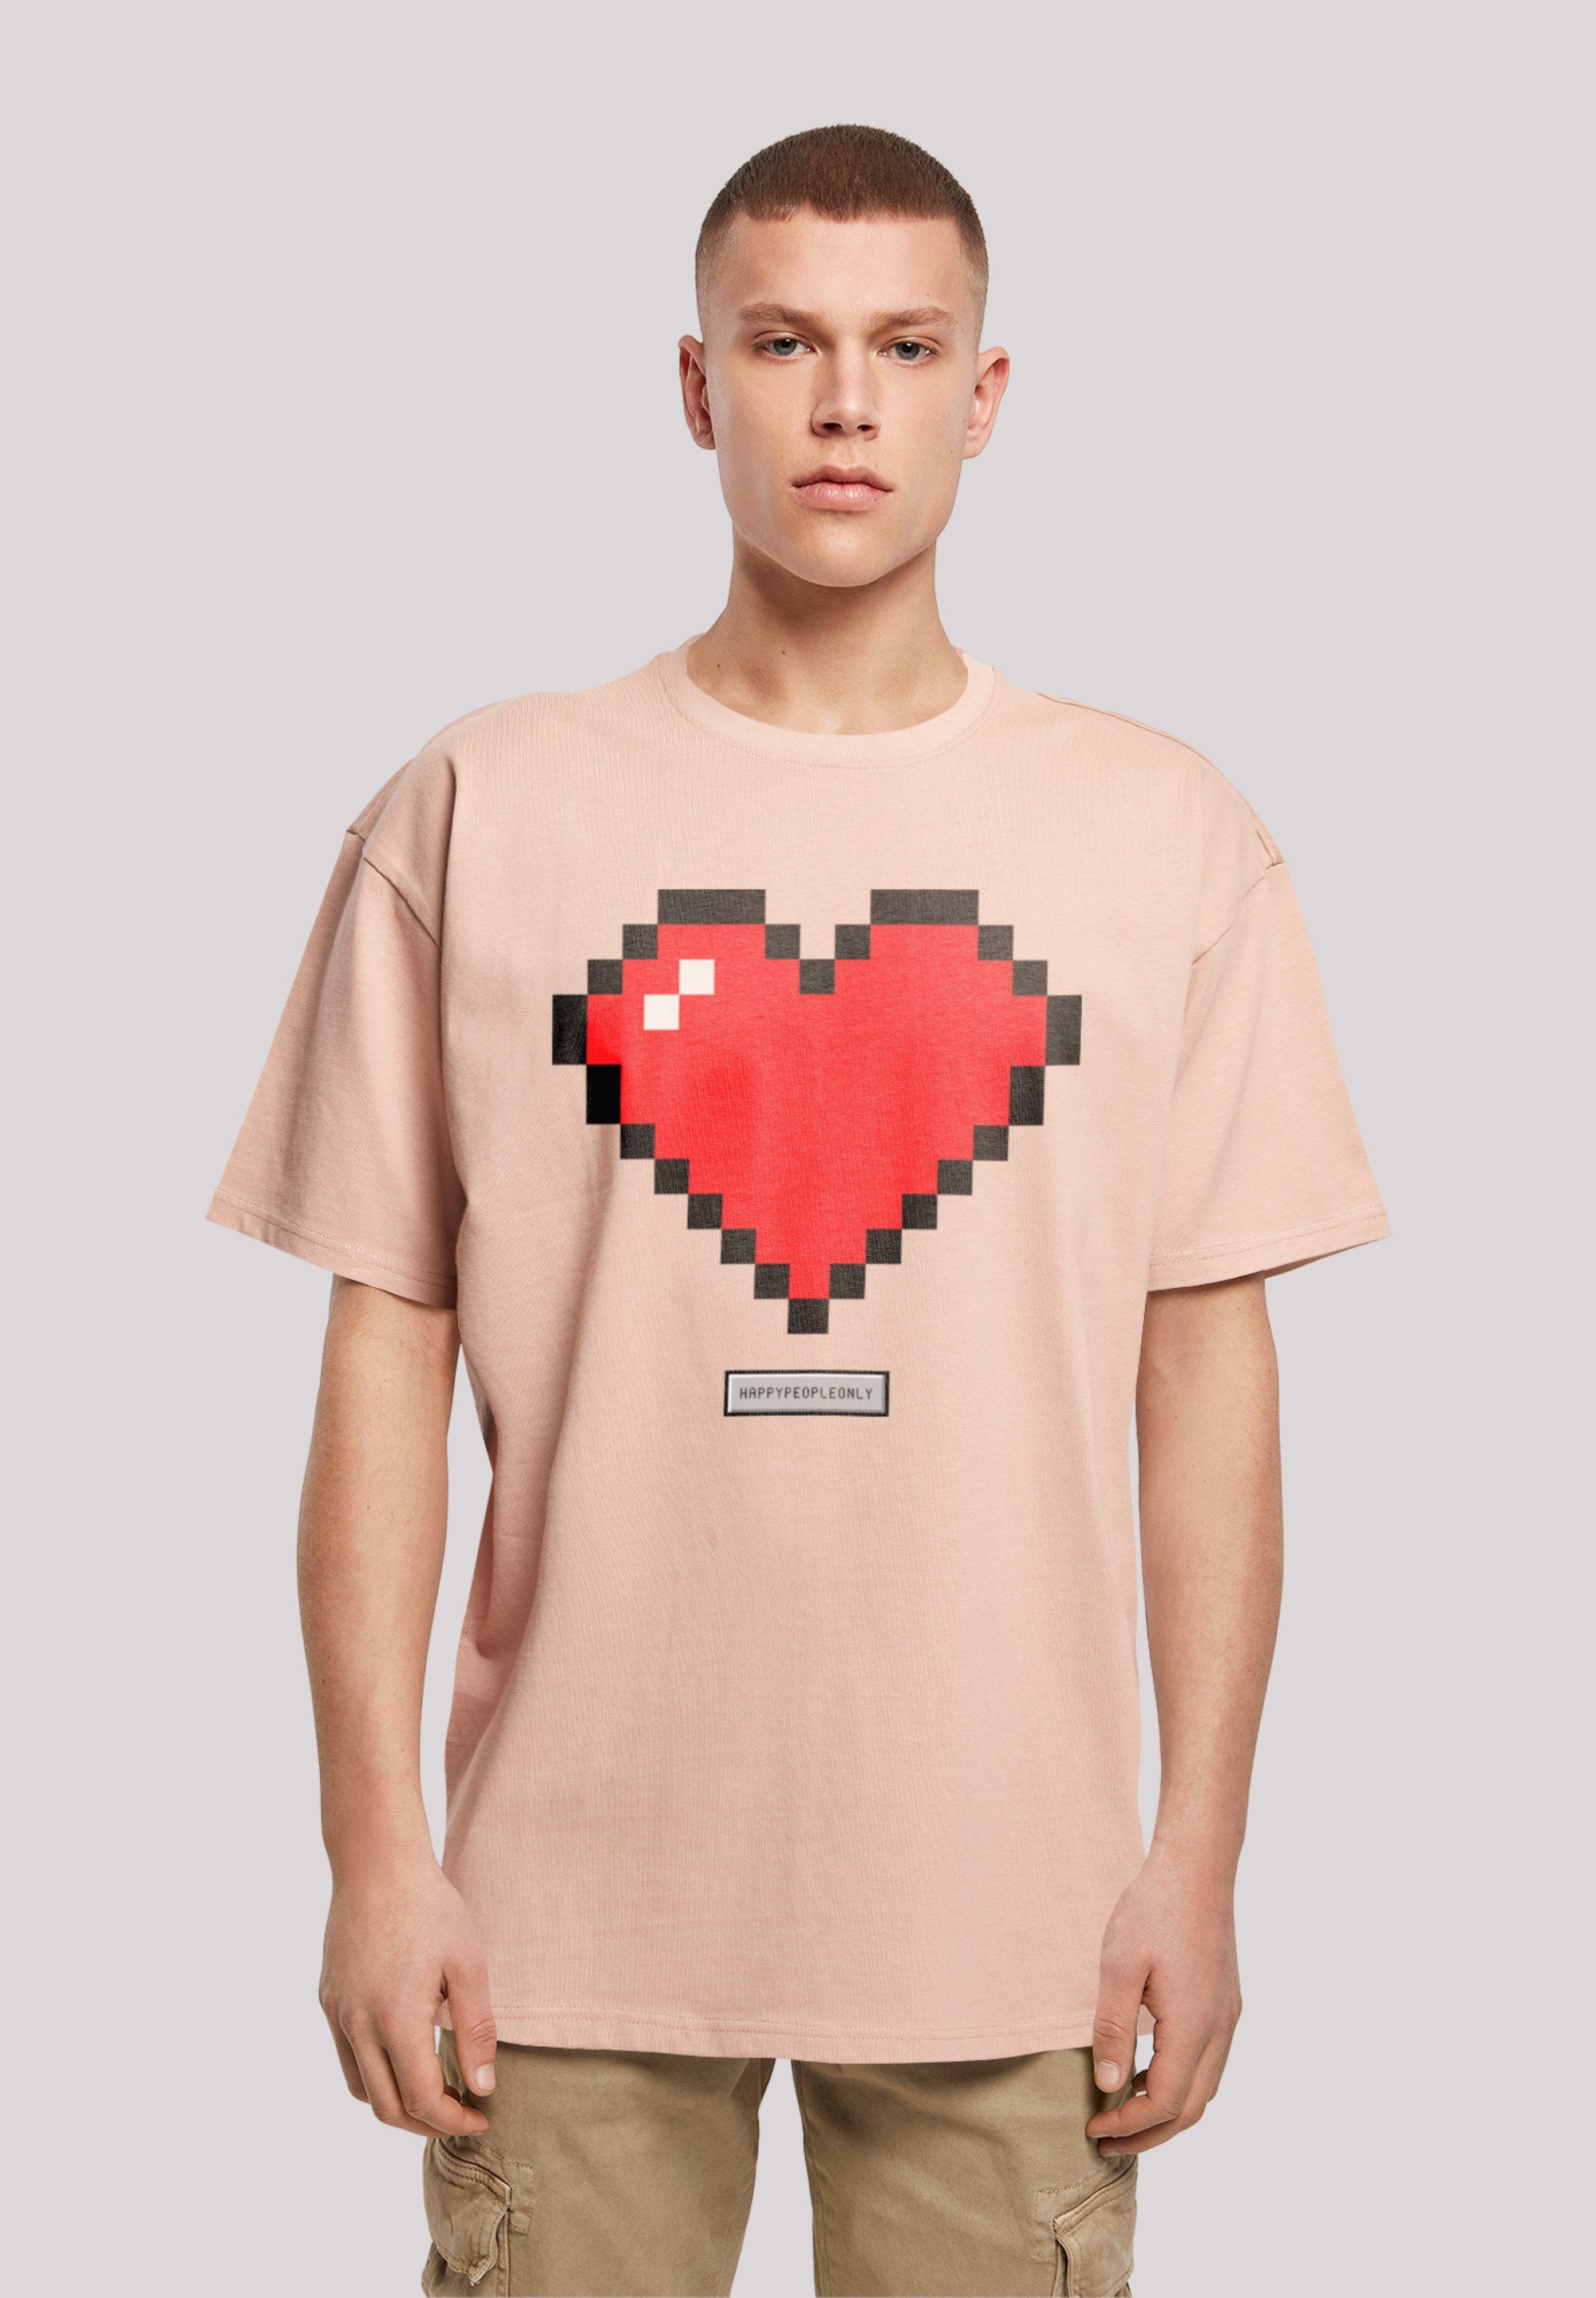 Print Pixel Happy T-Shirt Herz Good People F4NT4STIC amber Vibes